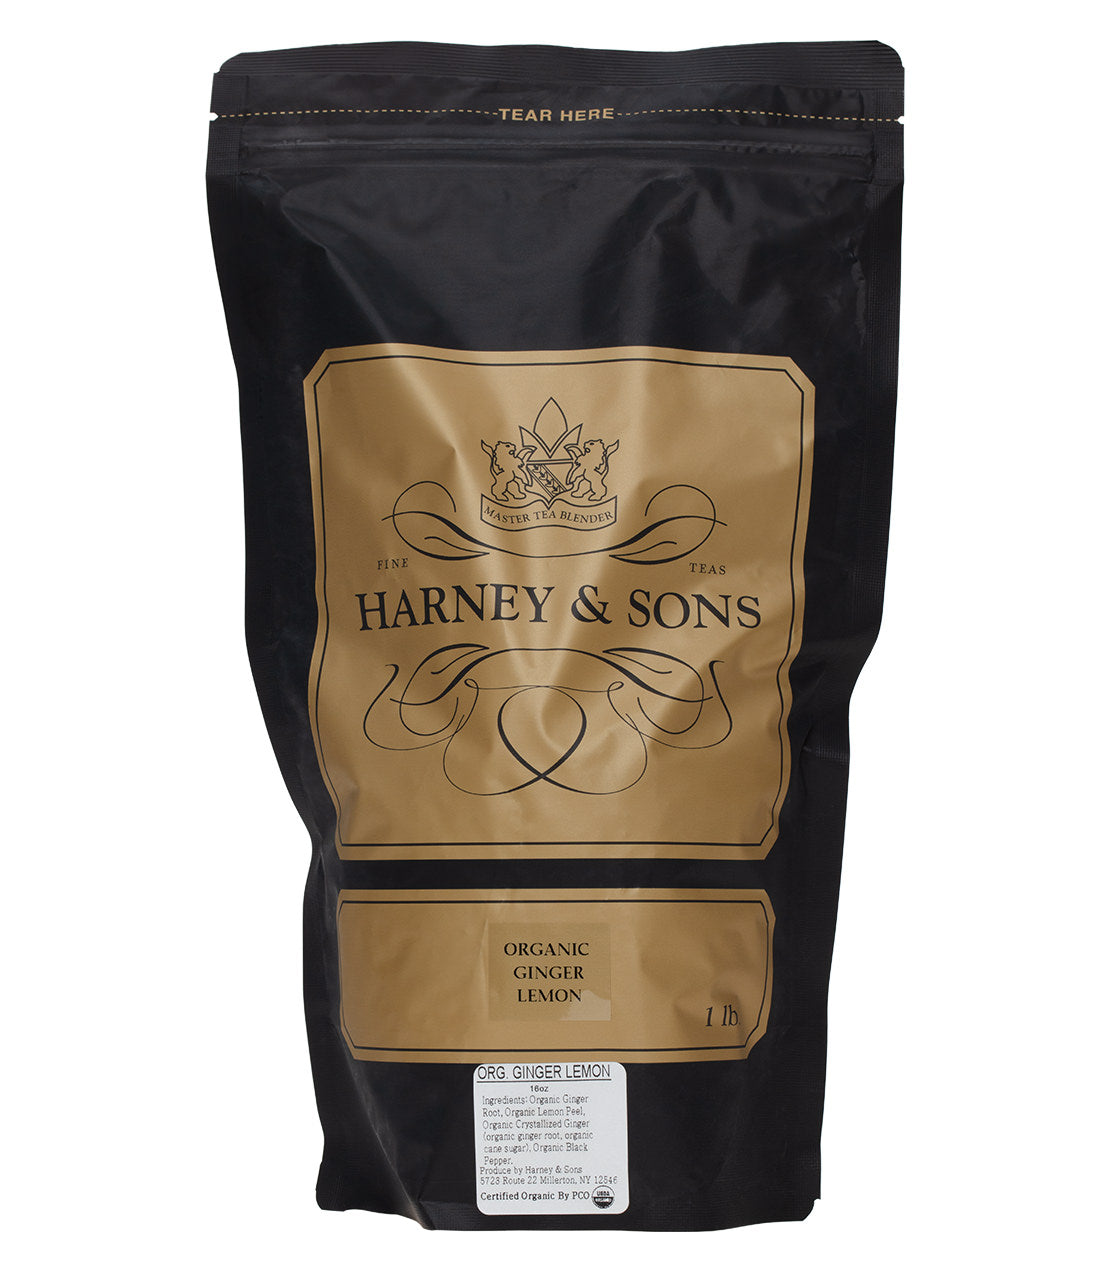 Organic Ginger Lemon - Loose 1 lb. Bag - Harney & Sons Fine Teas